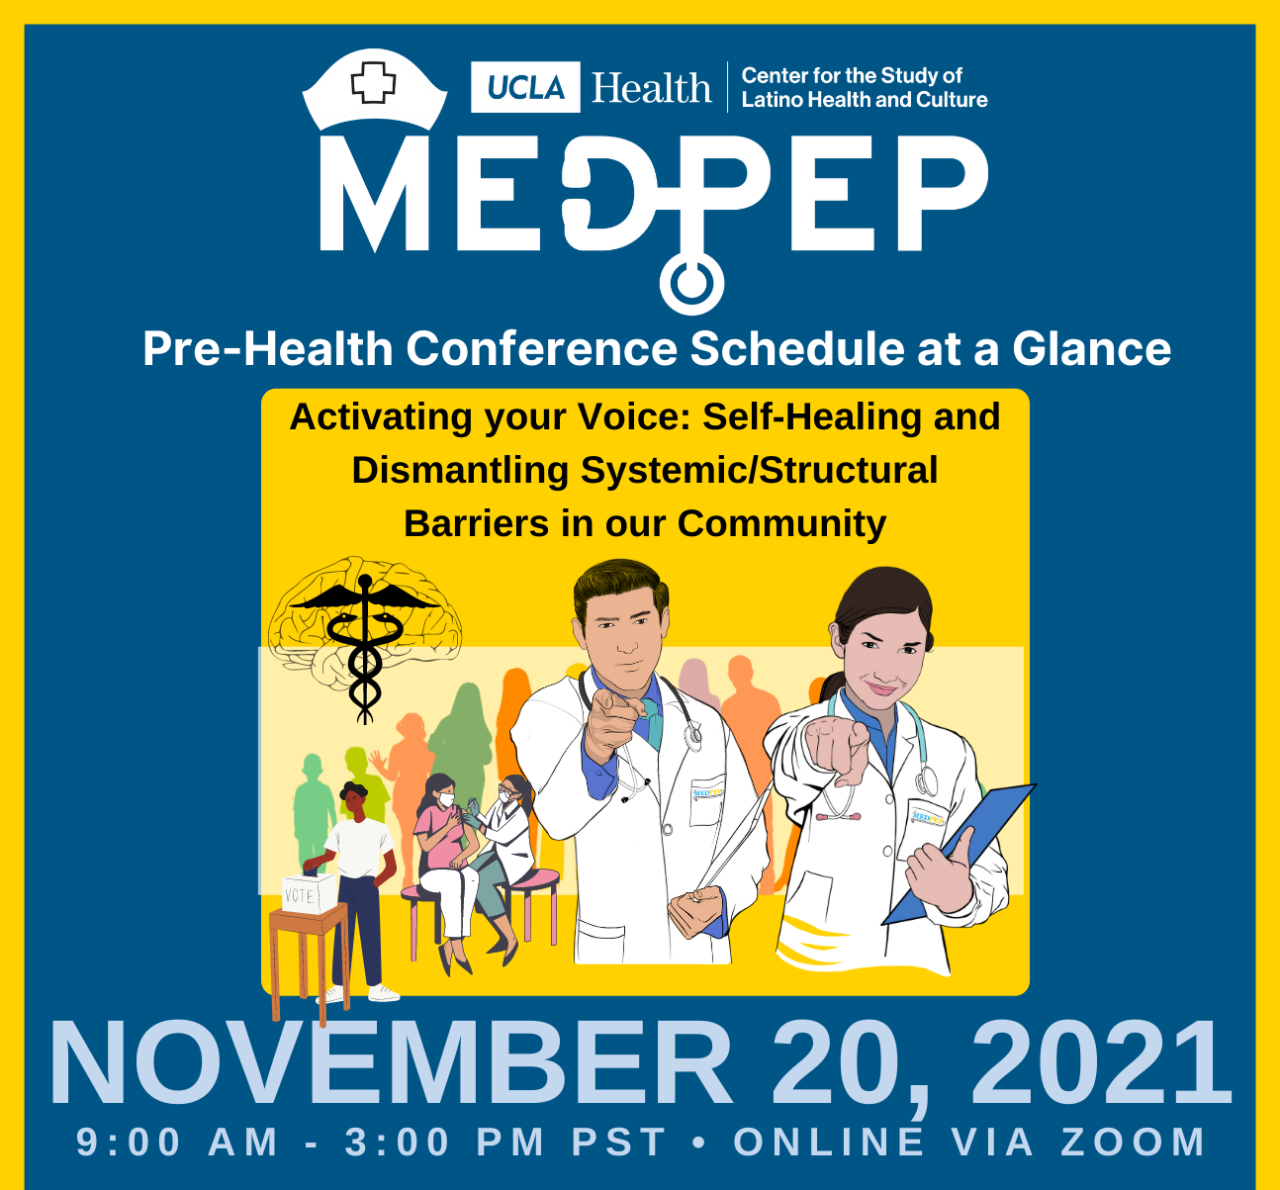 MEDPEP PreHealth Conference CESLAC UCLA Health